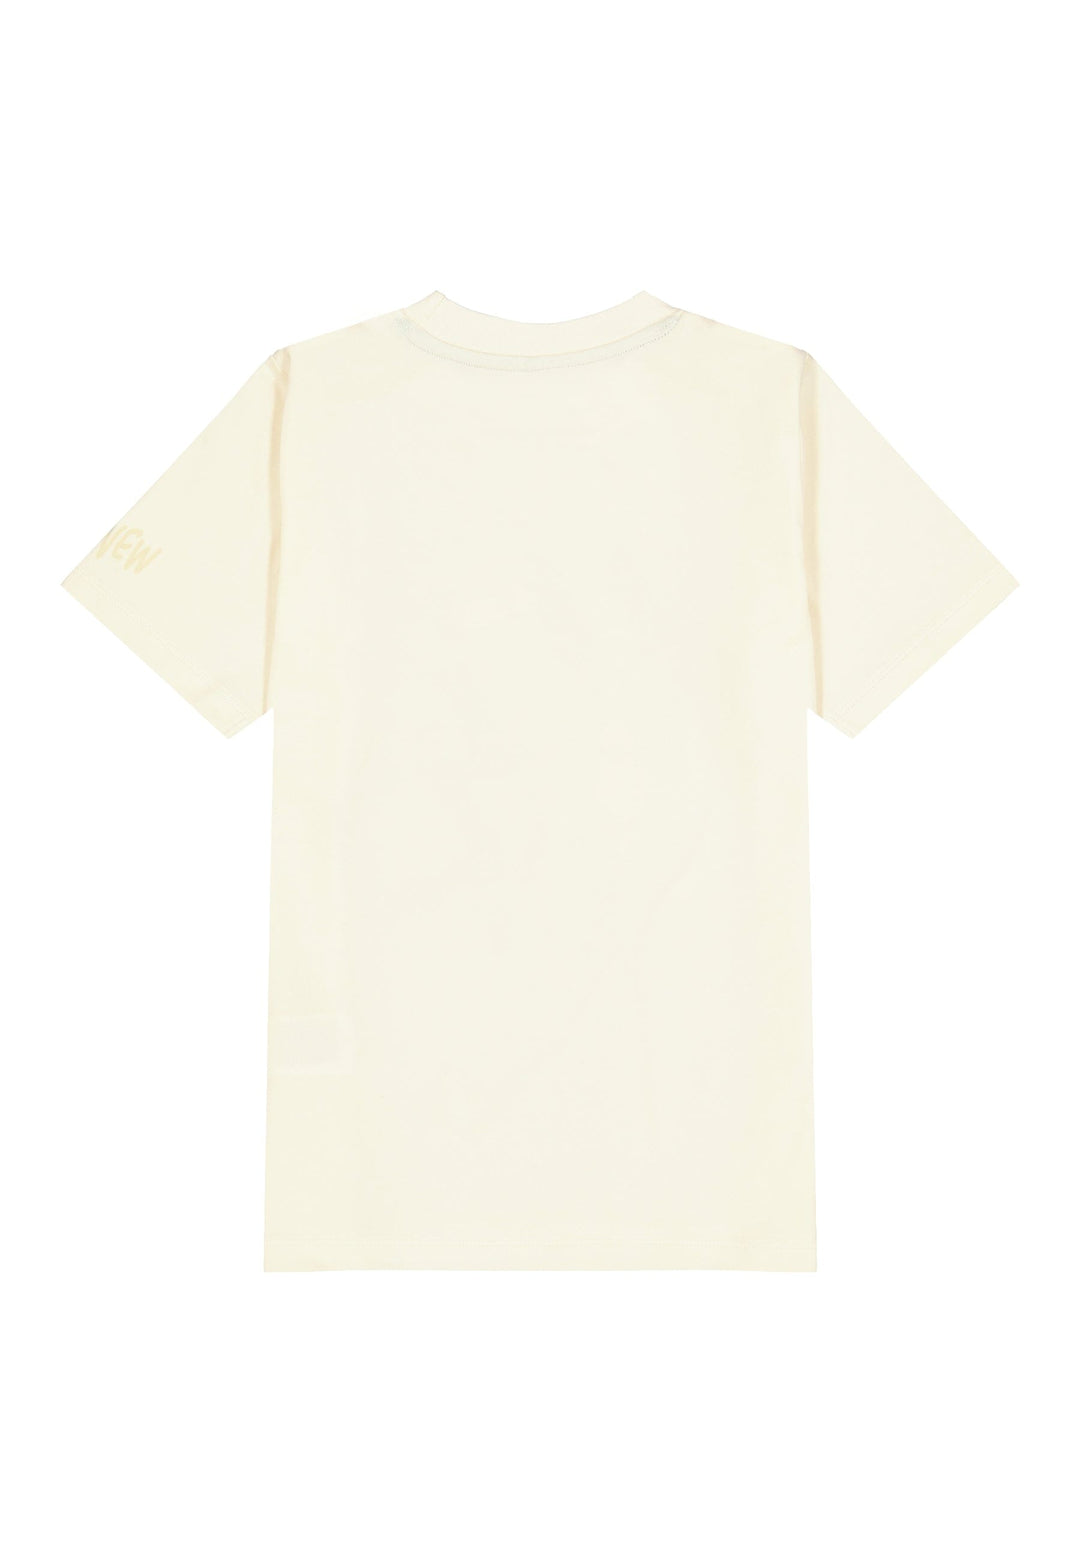 The New - Tnjames S_S Tee - White Swan T-shirts 